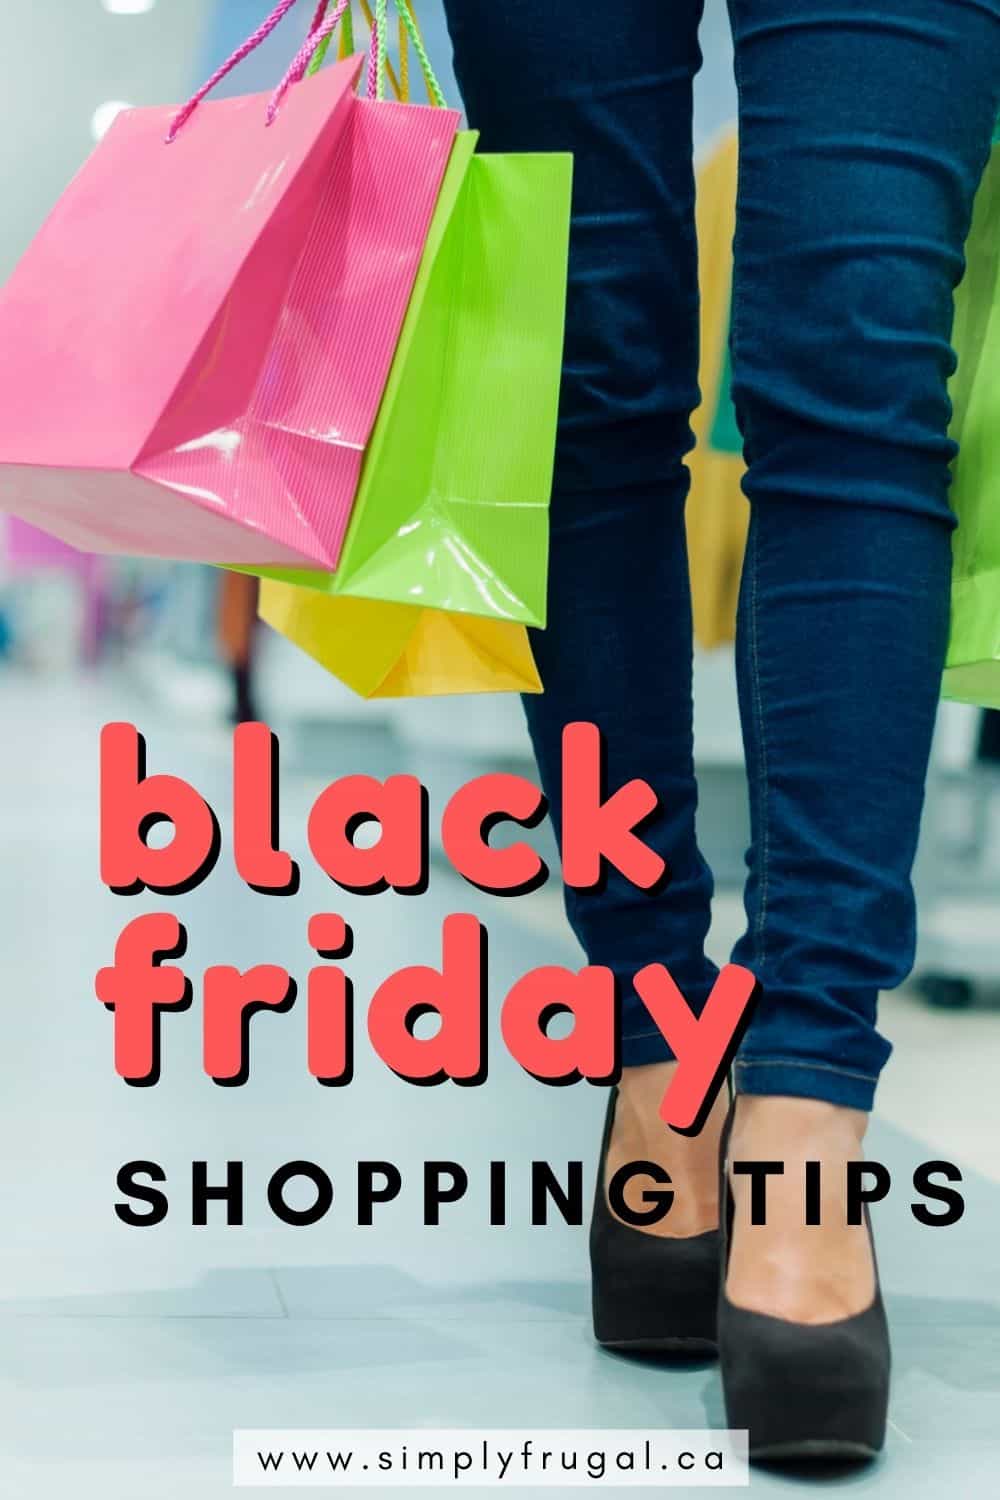 Tips for shopping on Black Friday